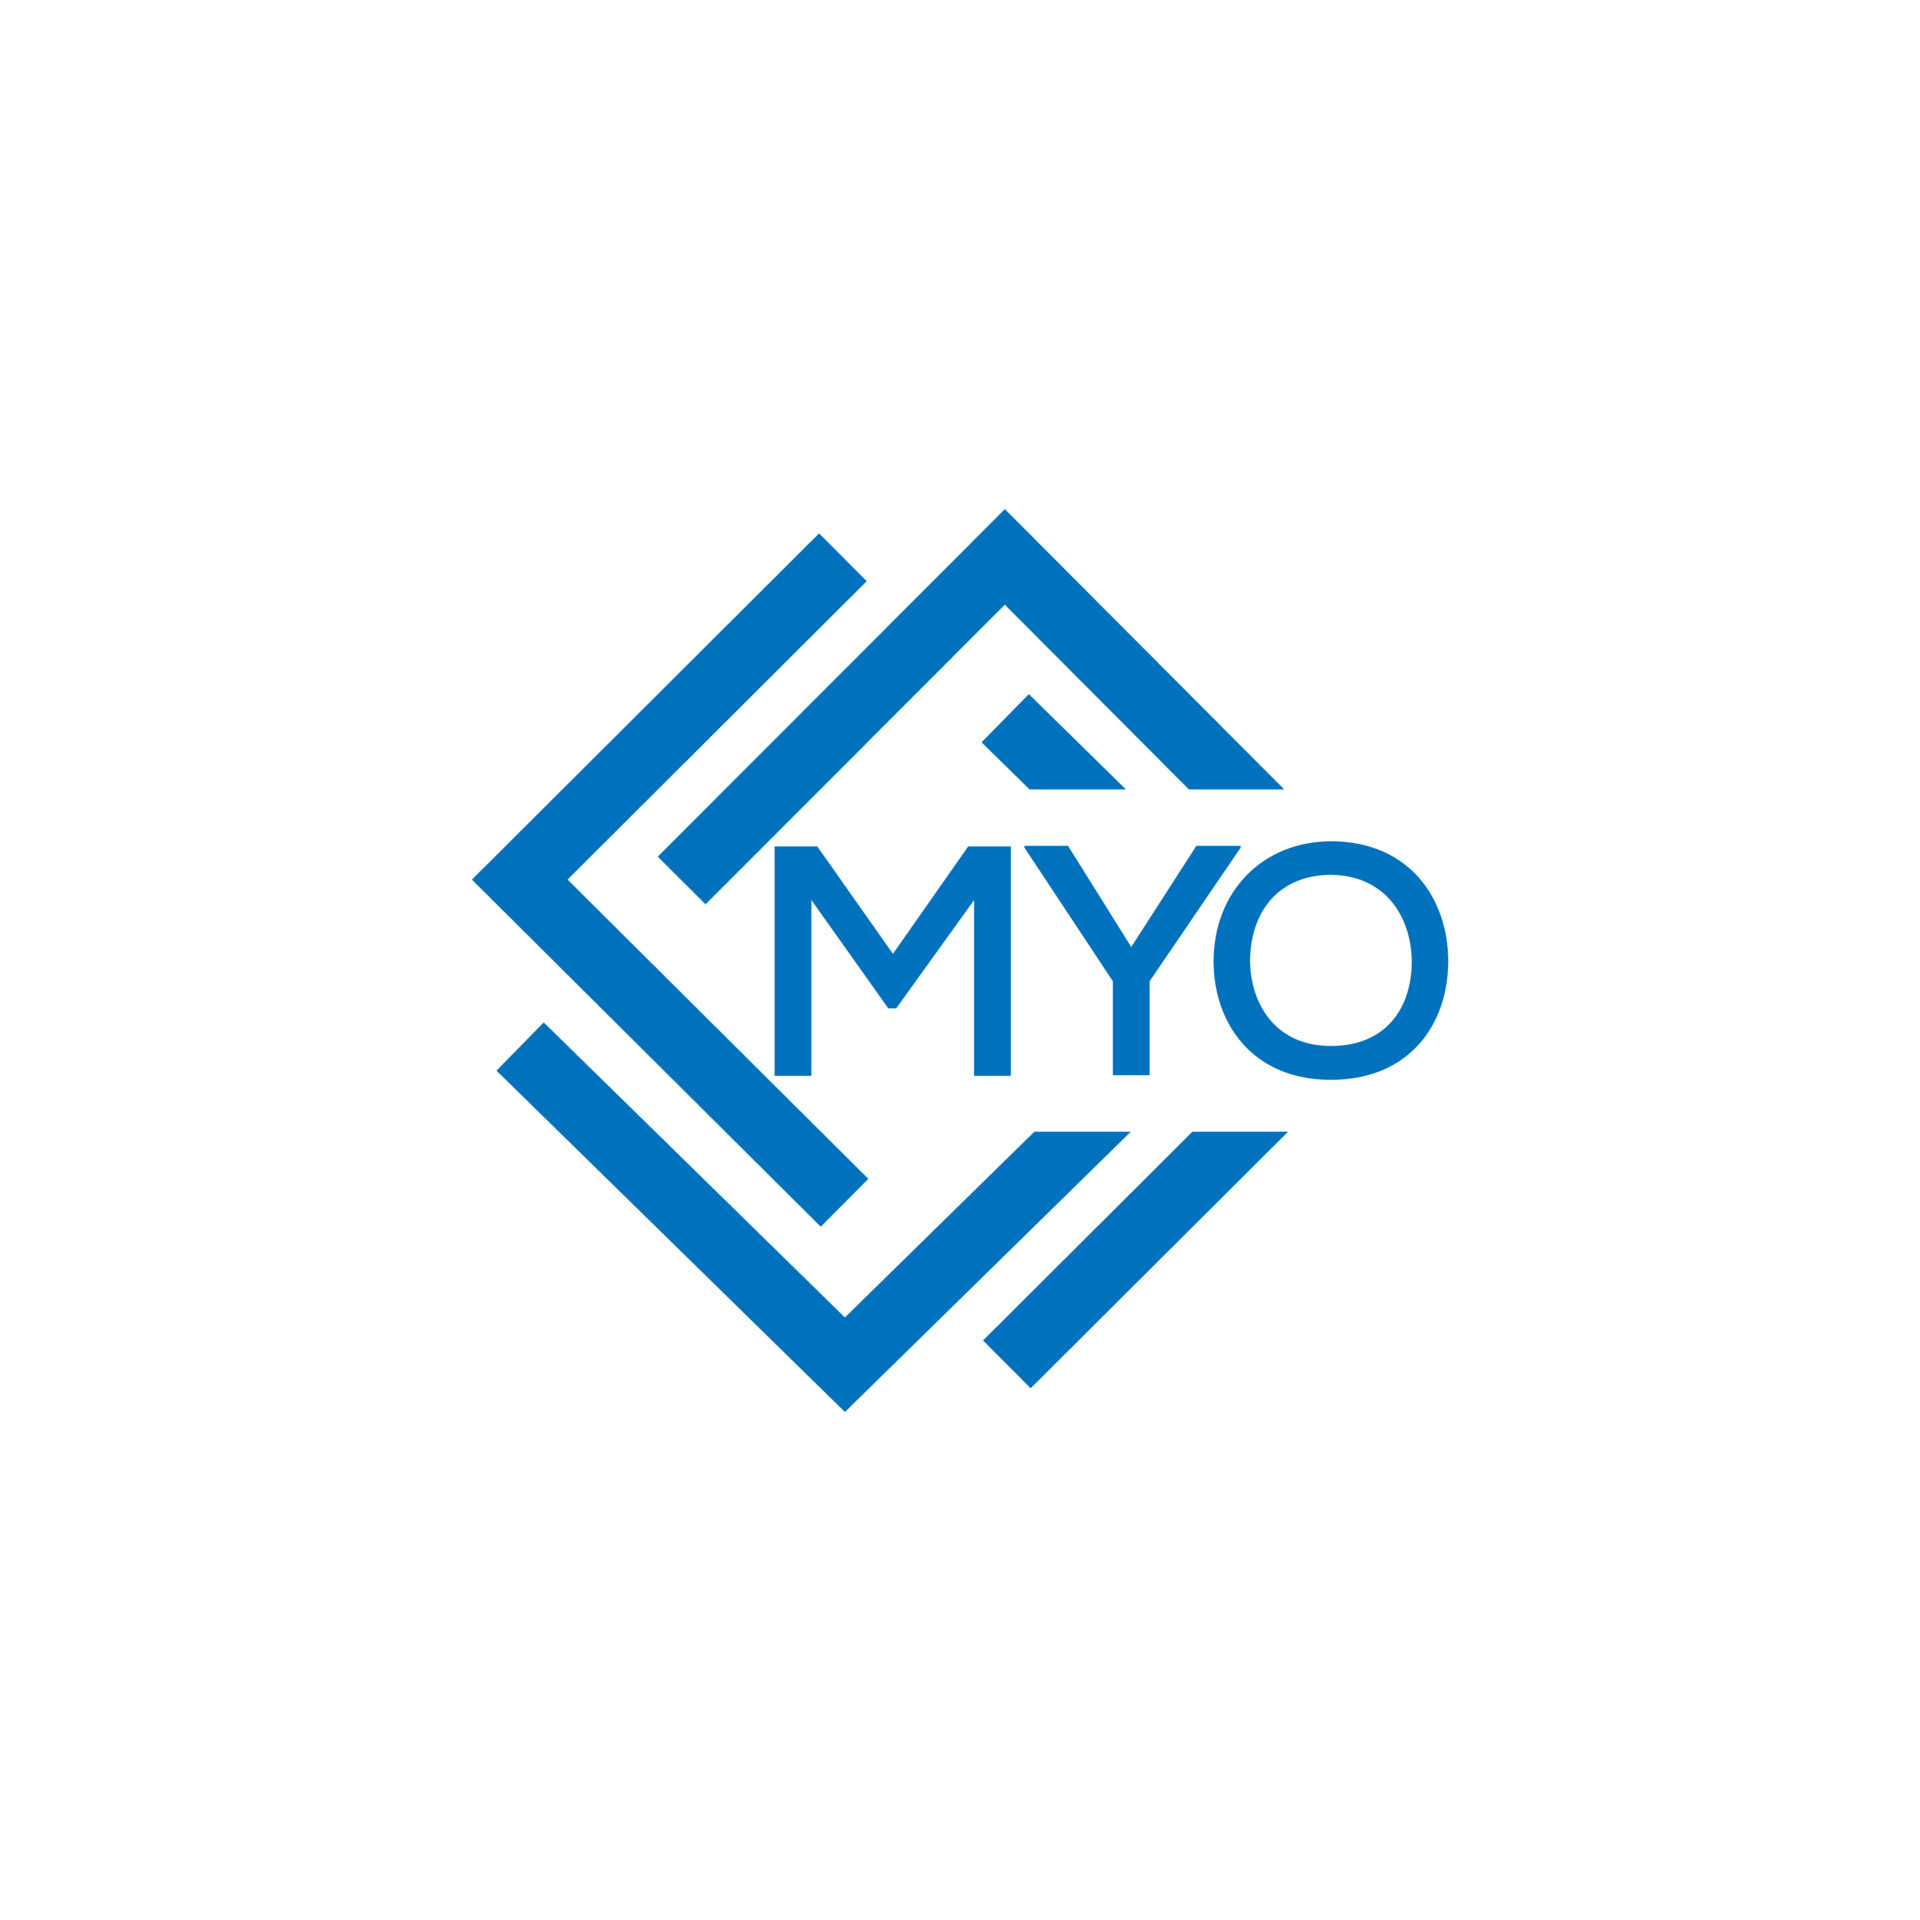 MYO letter logo design on white background. MYO creative circle